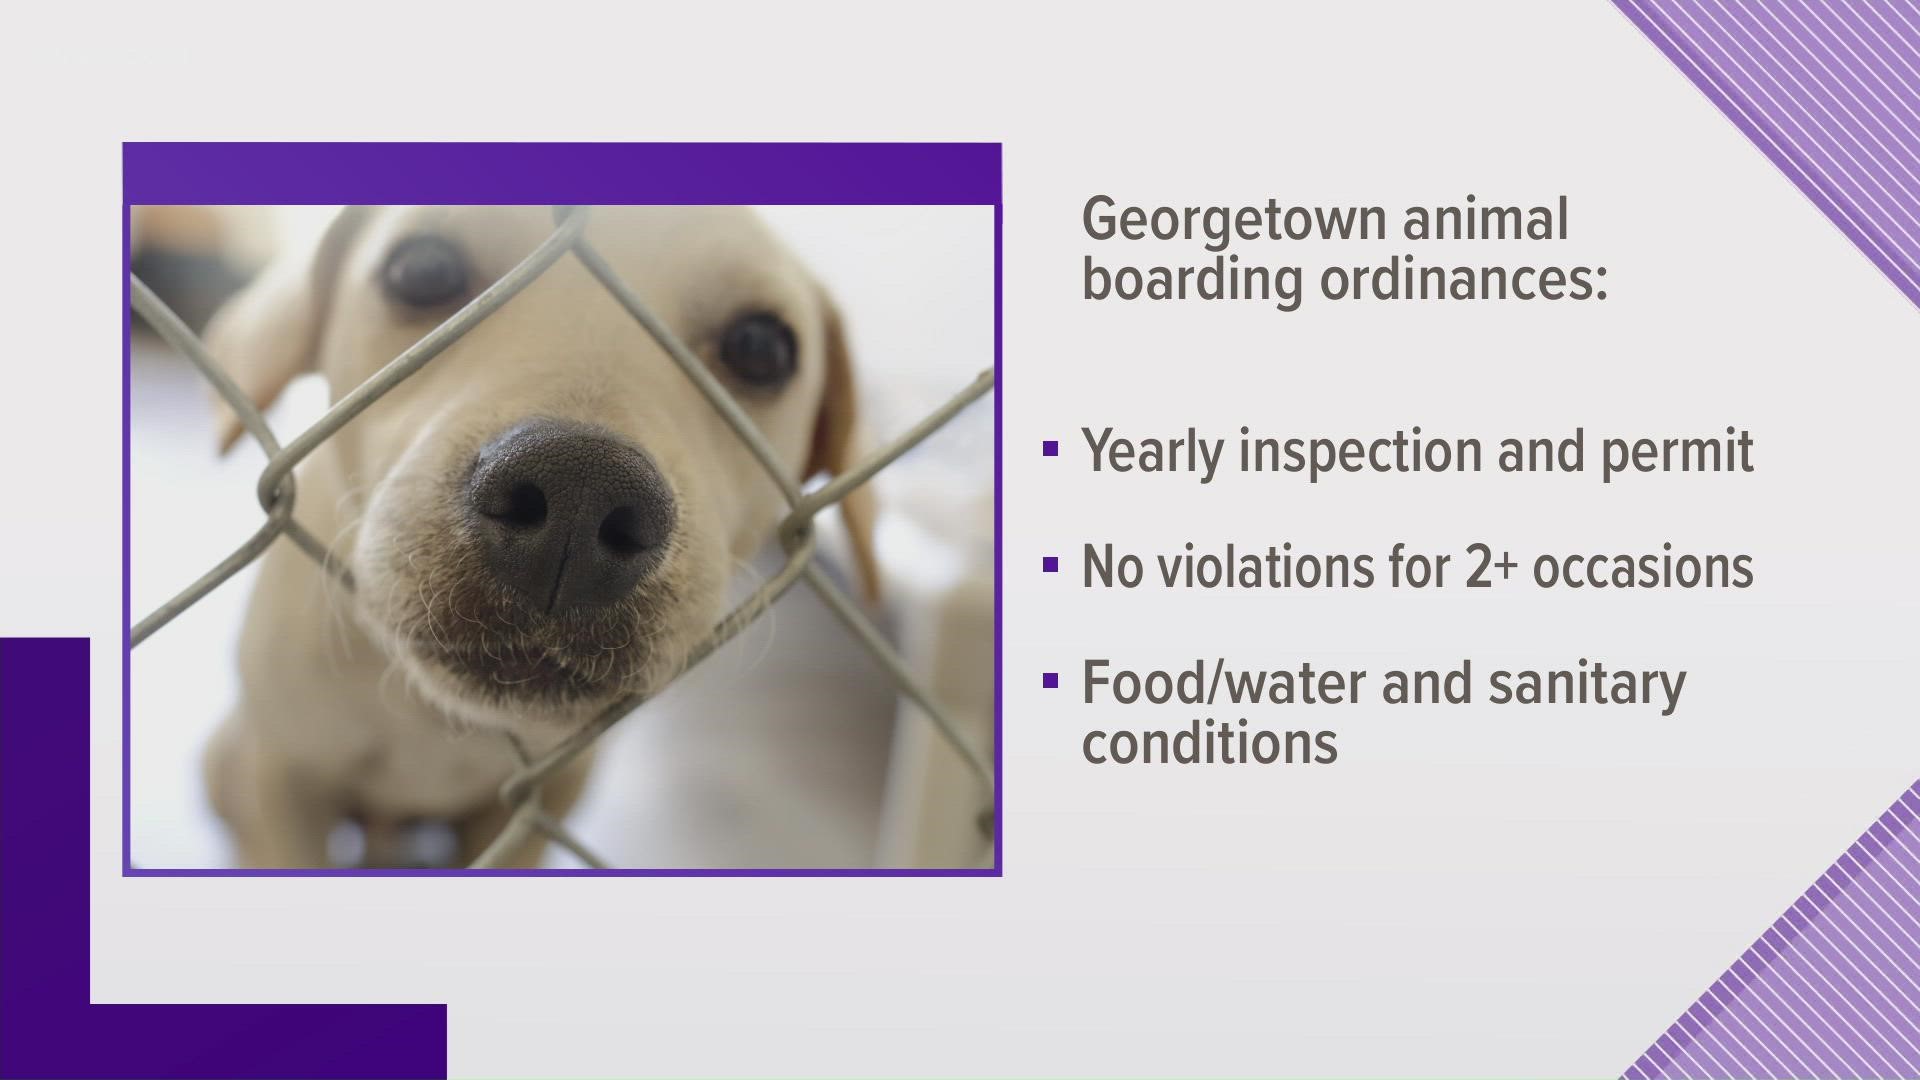 KVUE Defenders look at pet boarding regulations 